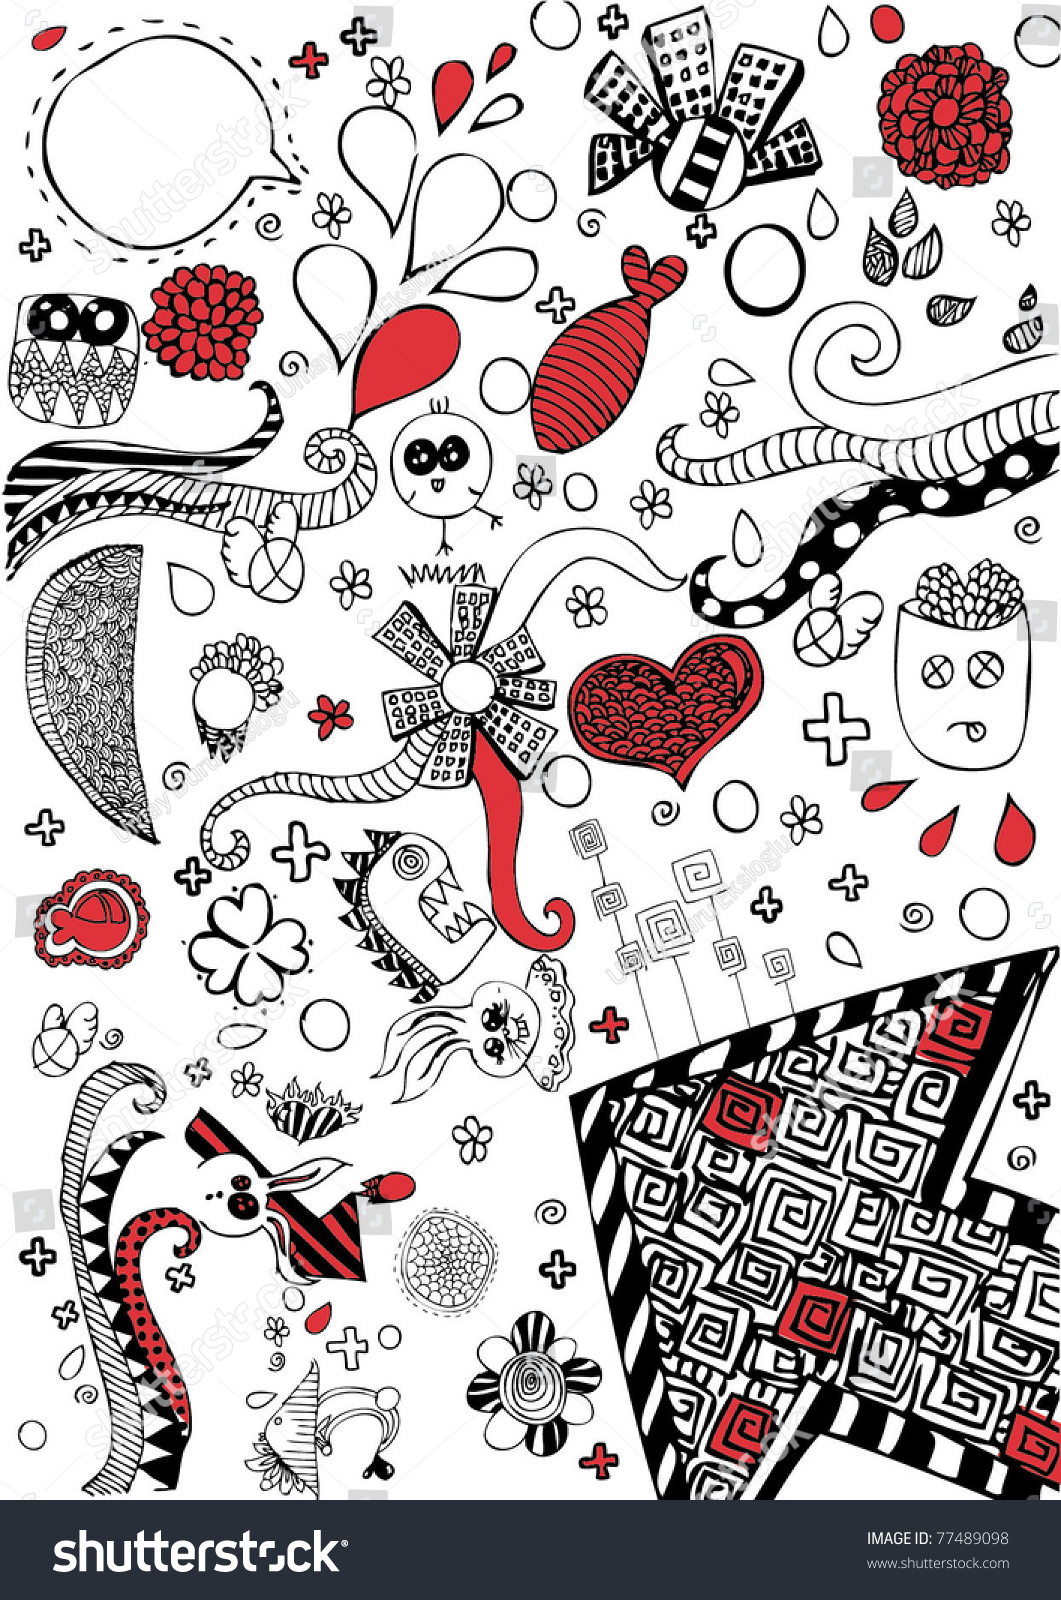 Doodle Background Stock Vector Illustration 77489098 : Shutterstock